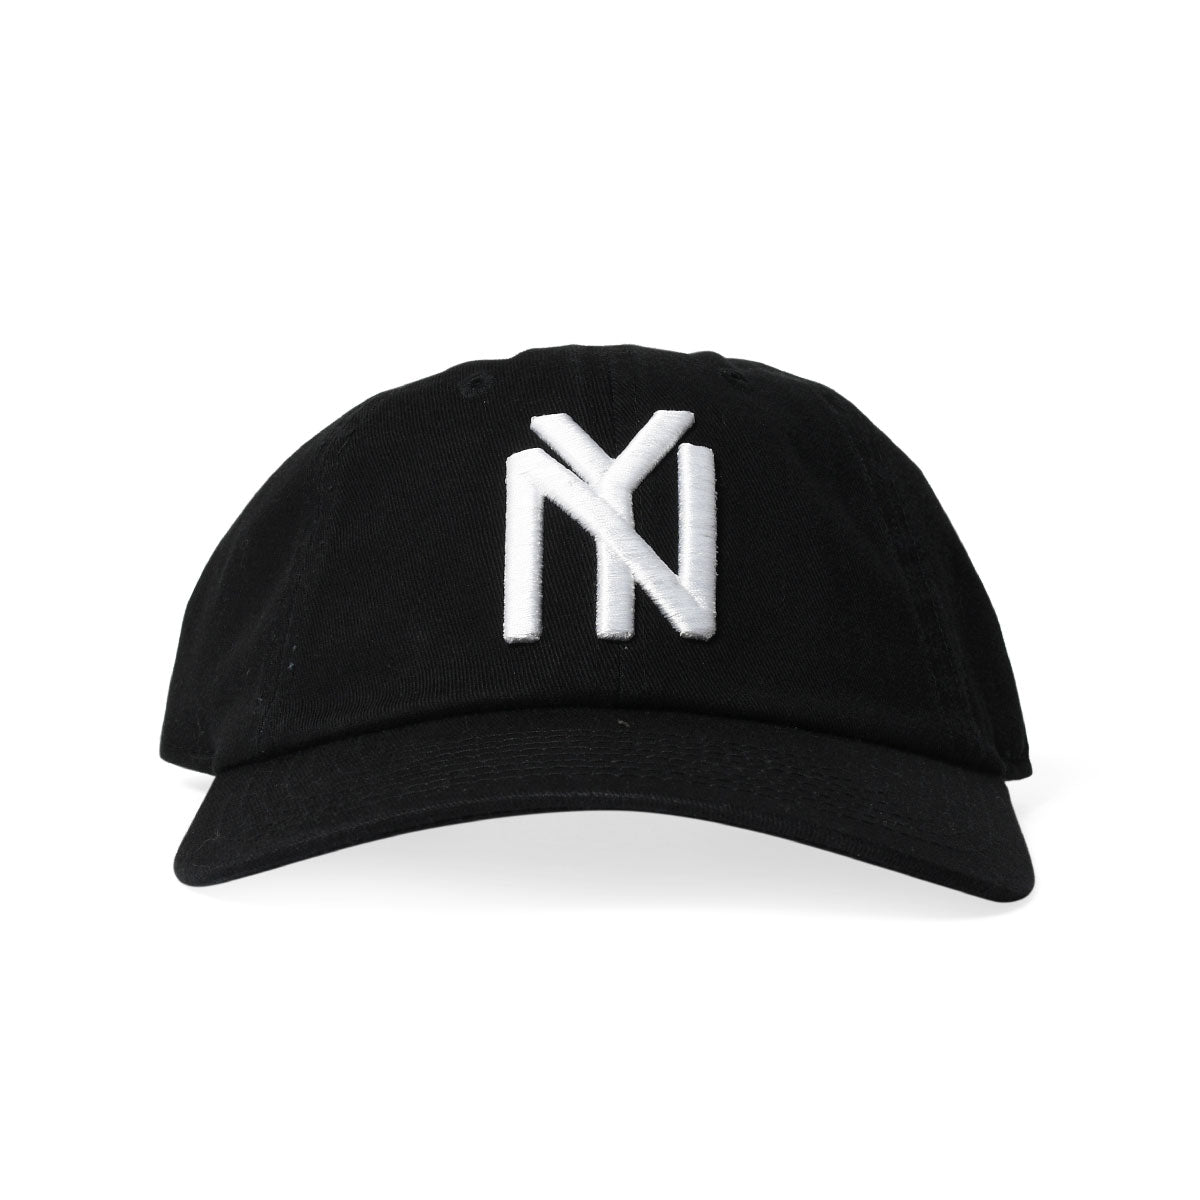 AMERICAN NEEDLE 44550ANY Ballpark - New York Black Yankees [44550ANY]